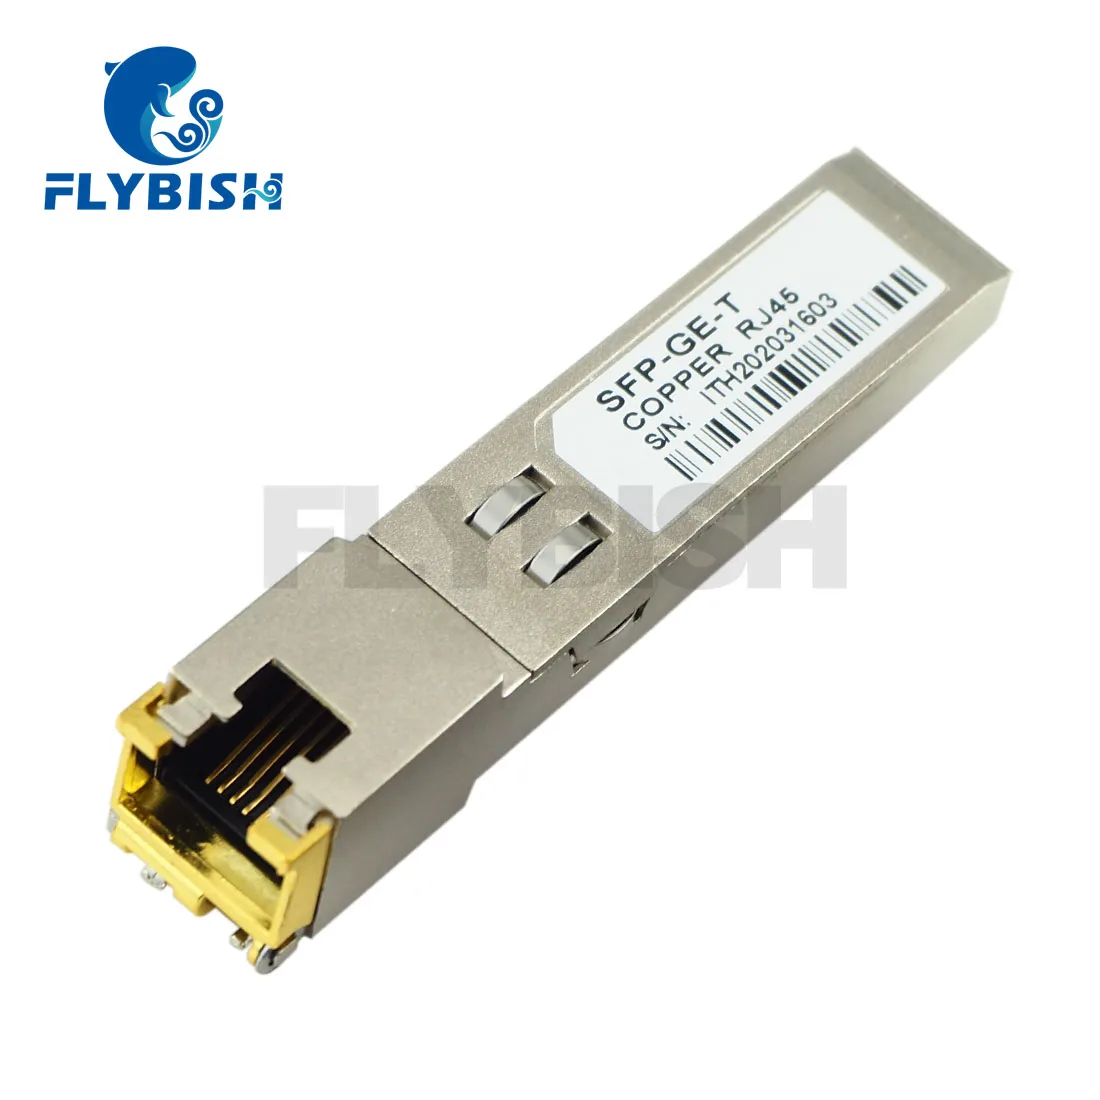 10/100/1000M m Gigabit Transceive es ampliamente compatible SFP-1ge-tx uf-rj45-1 g / SFP-GE-T 10/100/1000M 100 g SFP RJ45 1.25G SFP a RJ45 SFP a RJ45 10/100/1000Base-T módulo SFP Copper GLC-T 